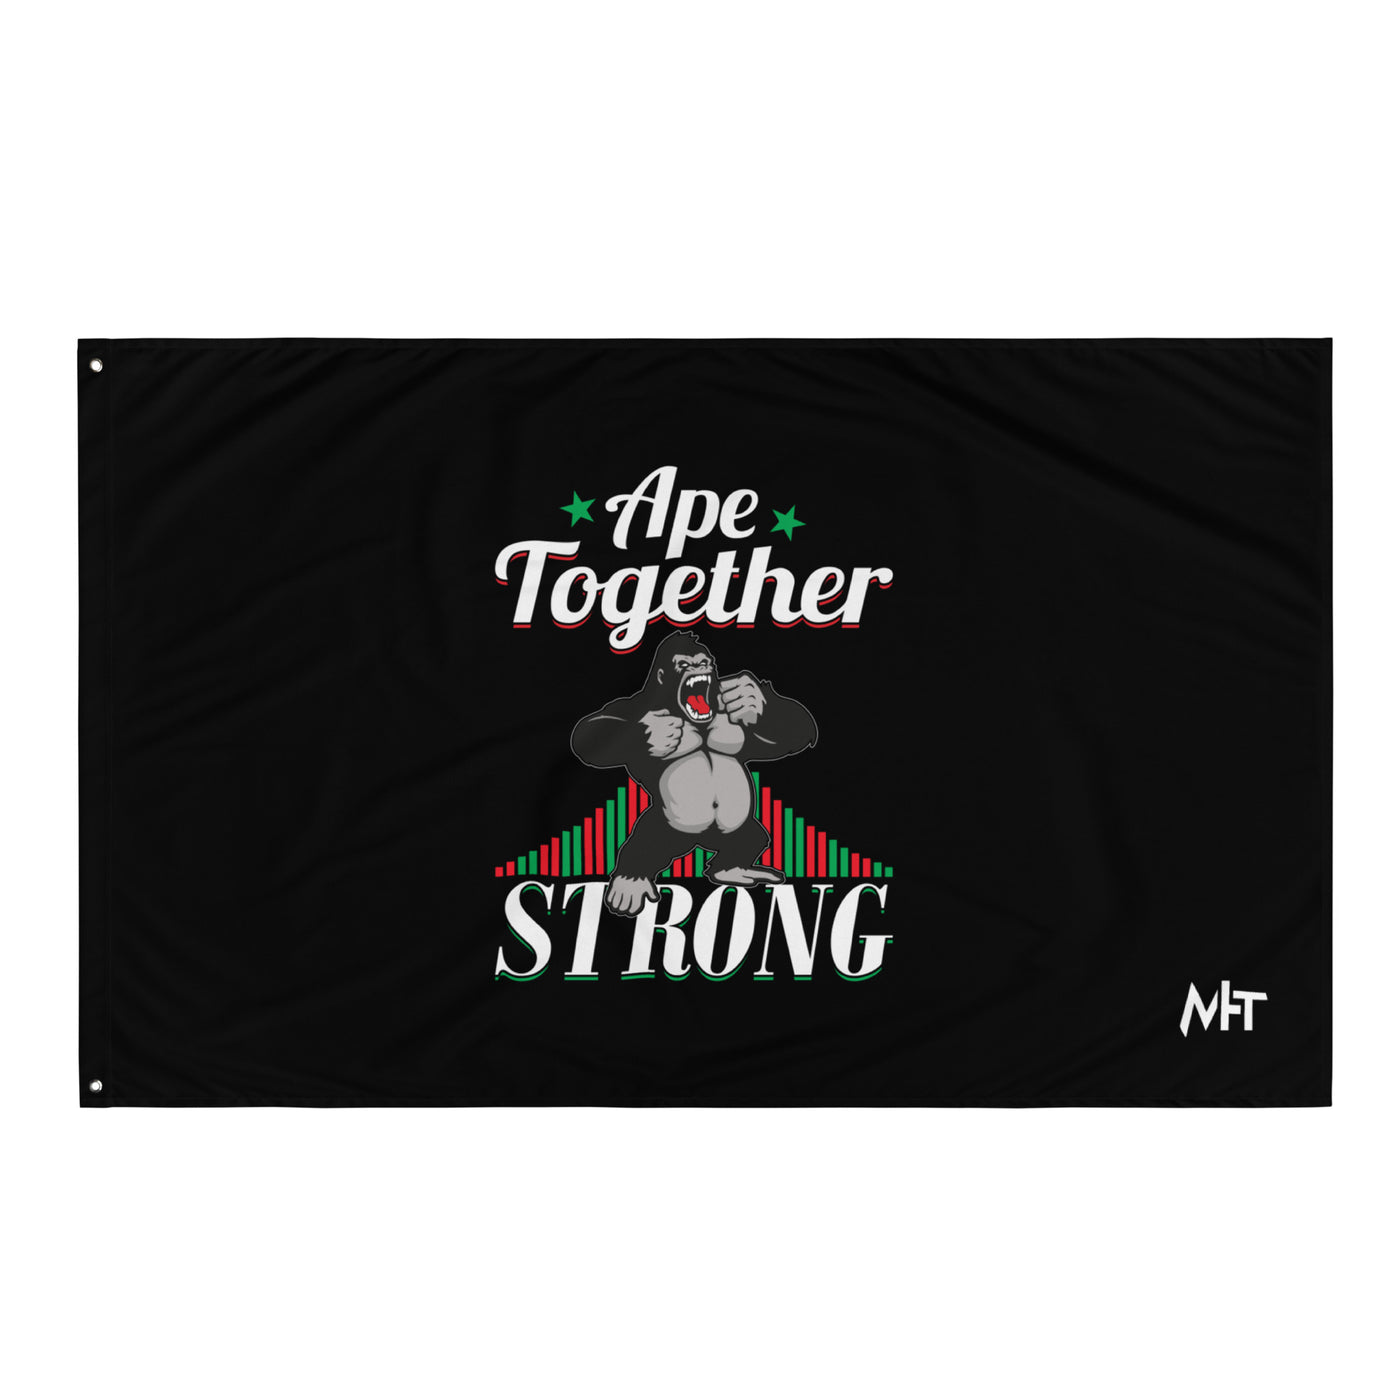 Ape together strong - Flag